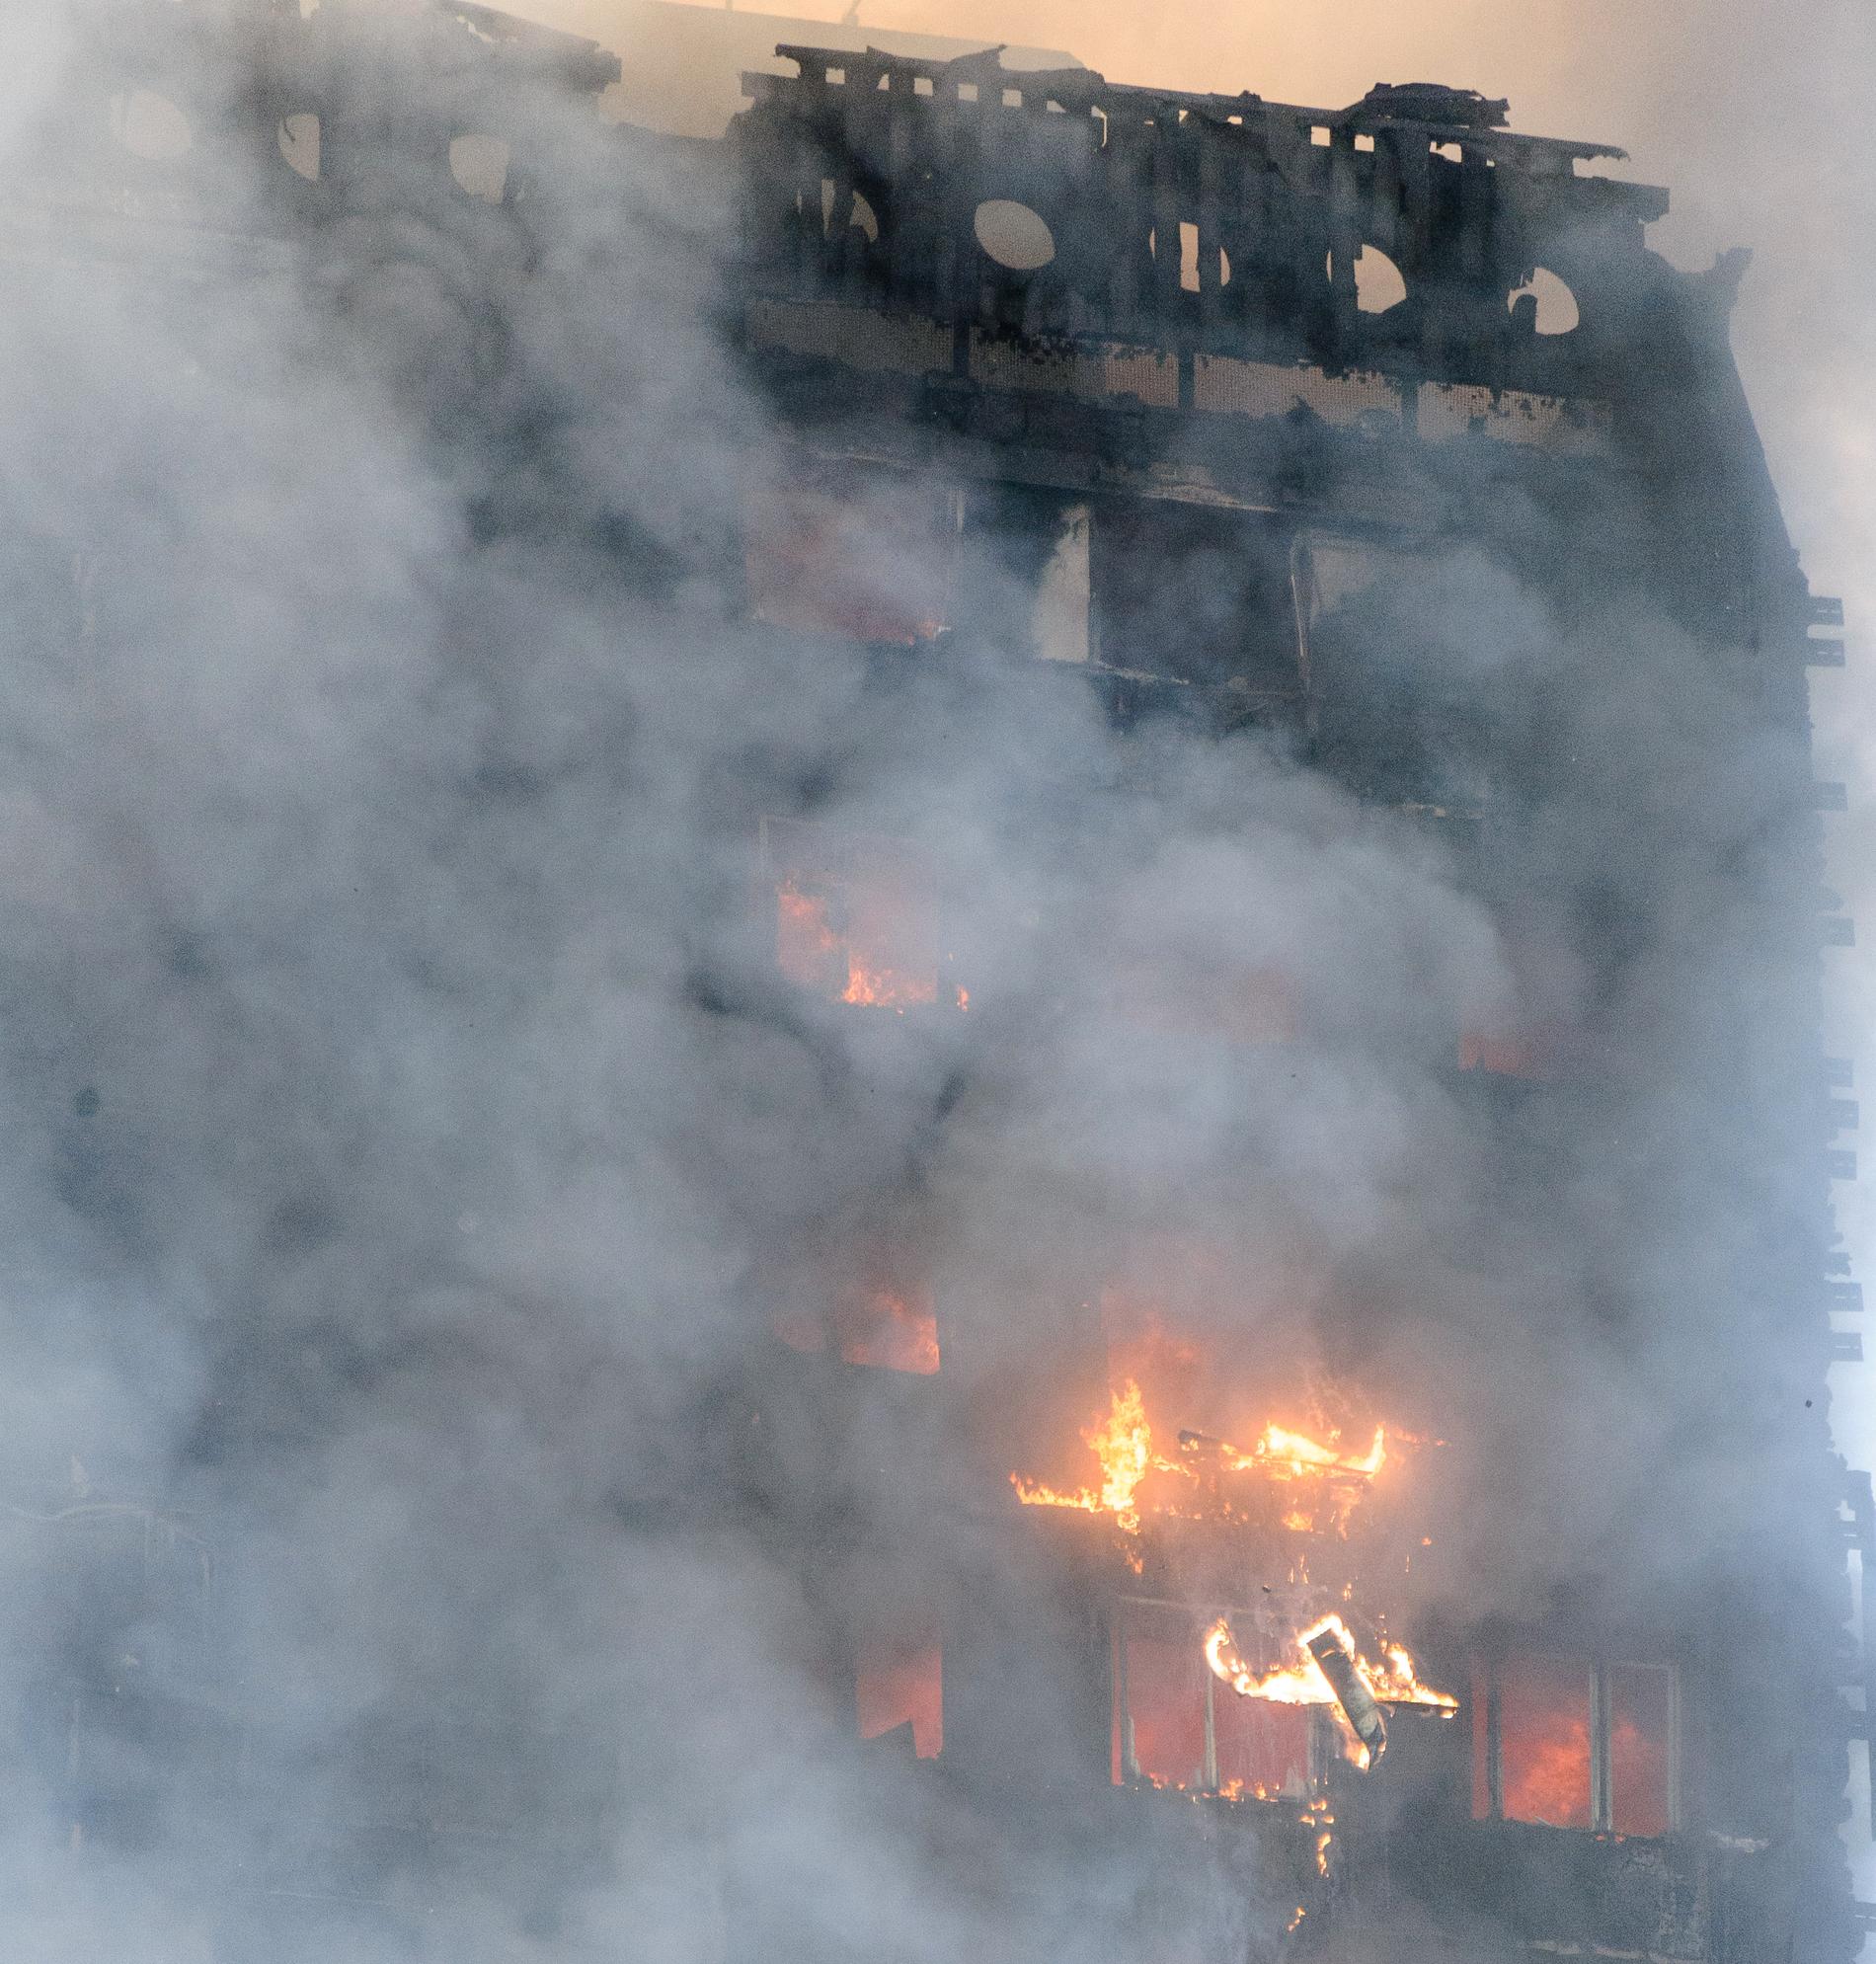 24-våningshuset Grenfell Tower brann som papper i juni 2017. Sjuttioen människor miste livet.